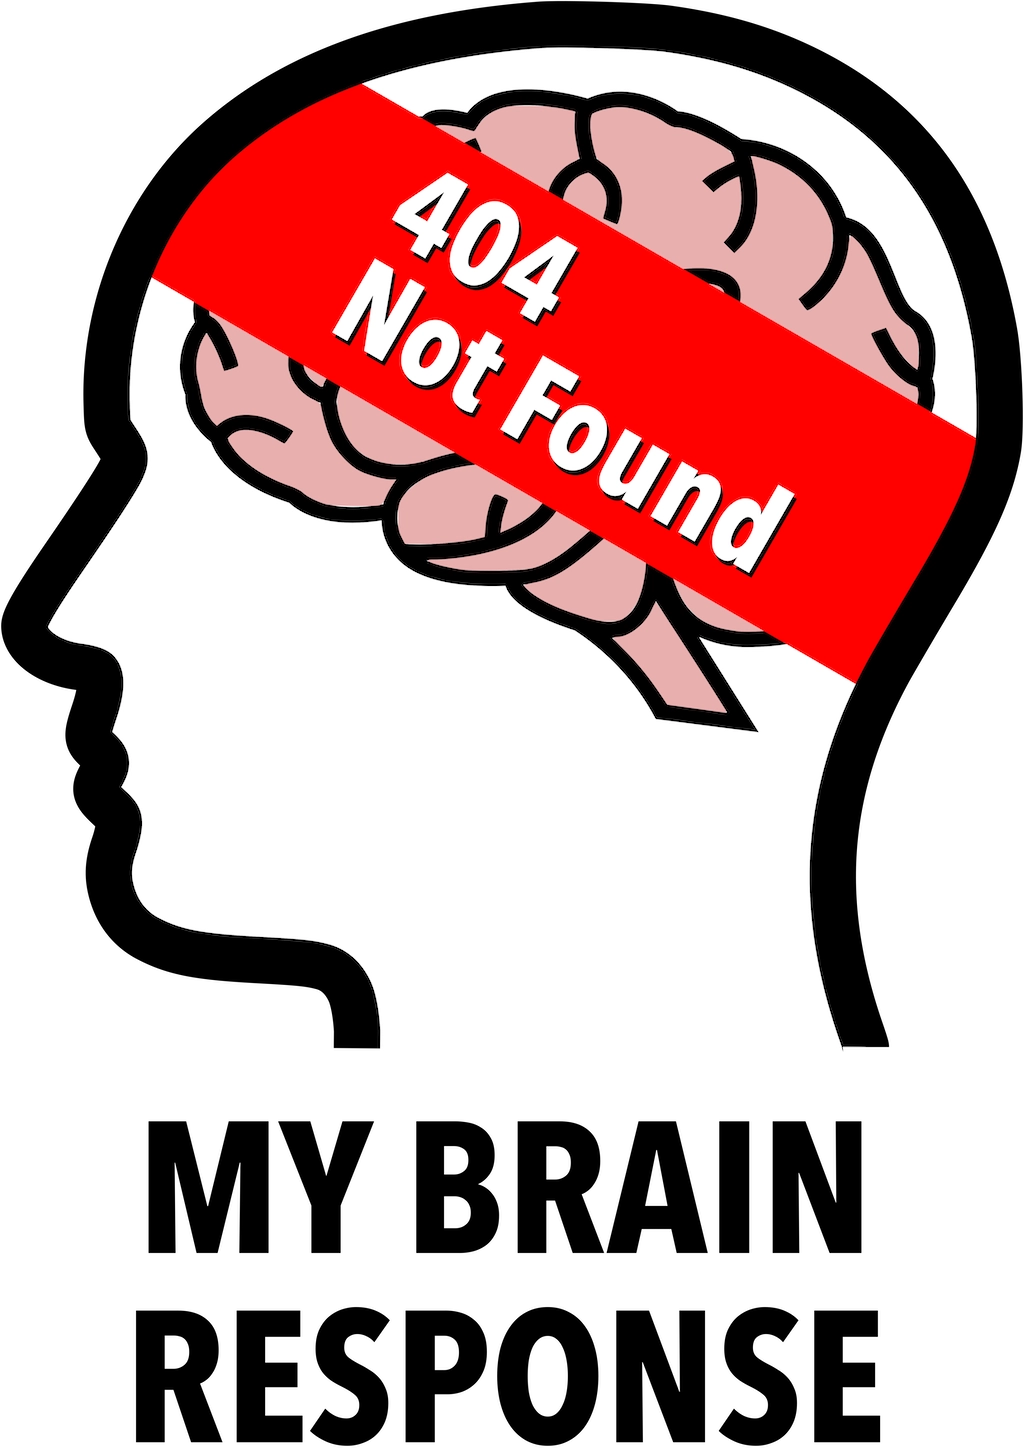 My Brain Response: 404 Not Found